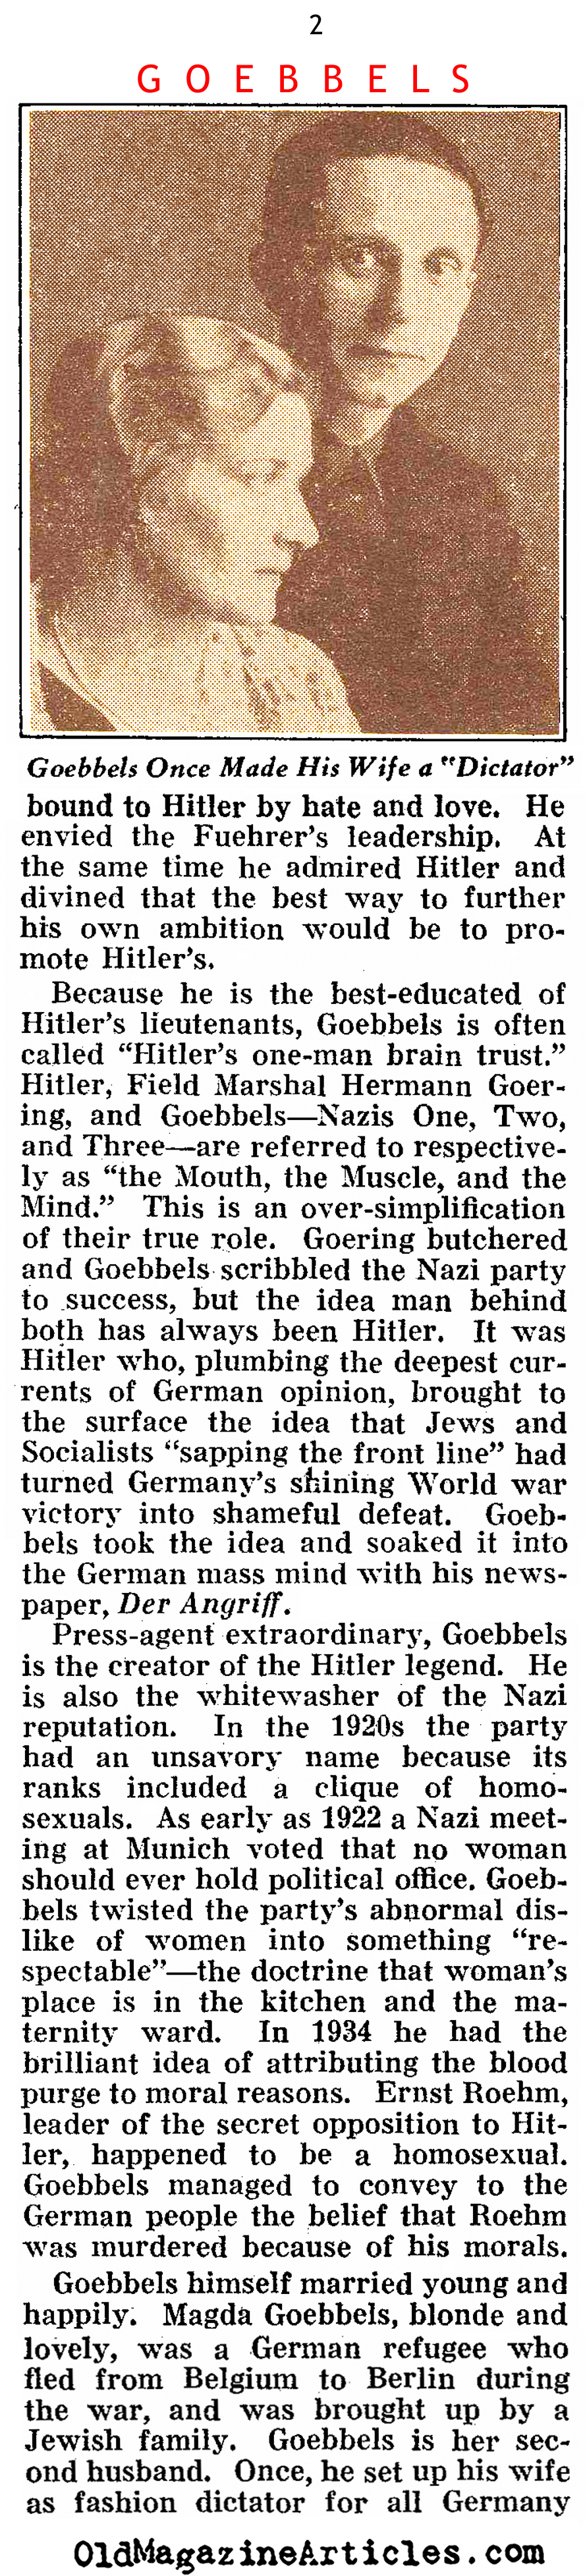 Meet Joseph Goebbels (Pathfinder Magazine, 1938